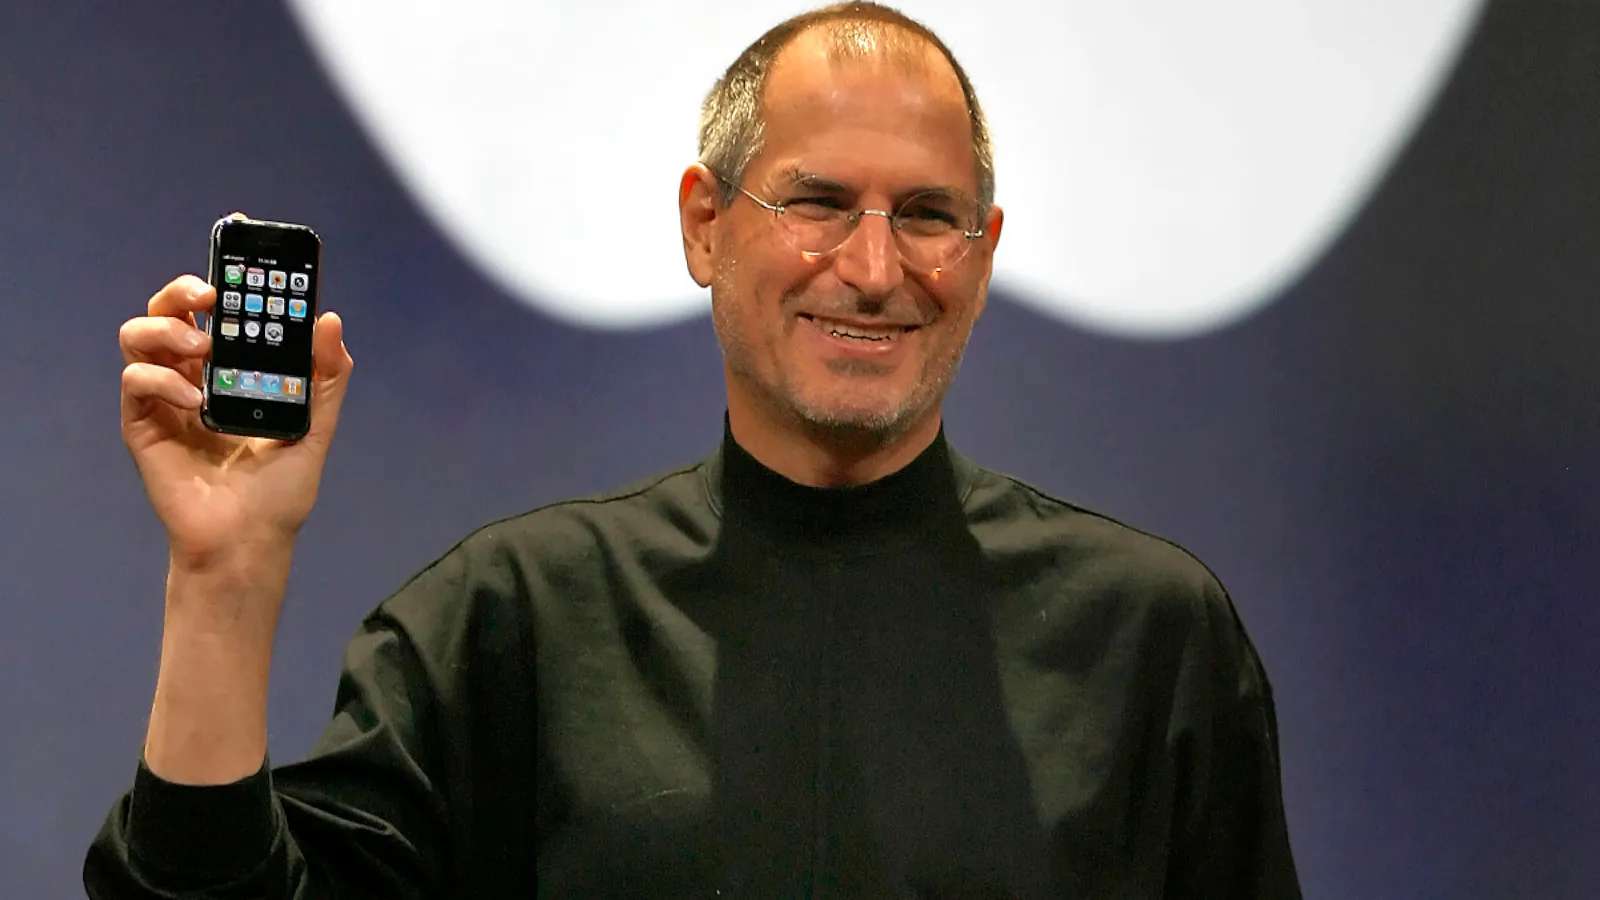 Steve Jobs din Apple puzzle online din fotografie